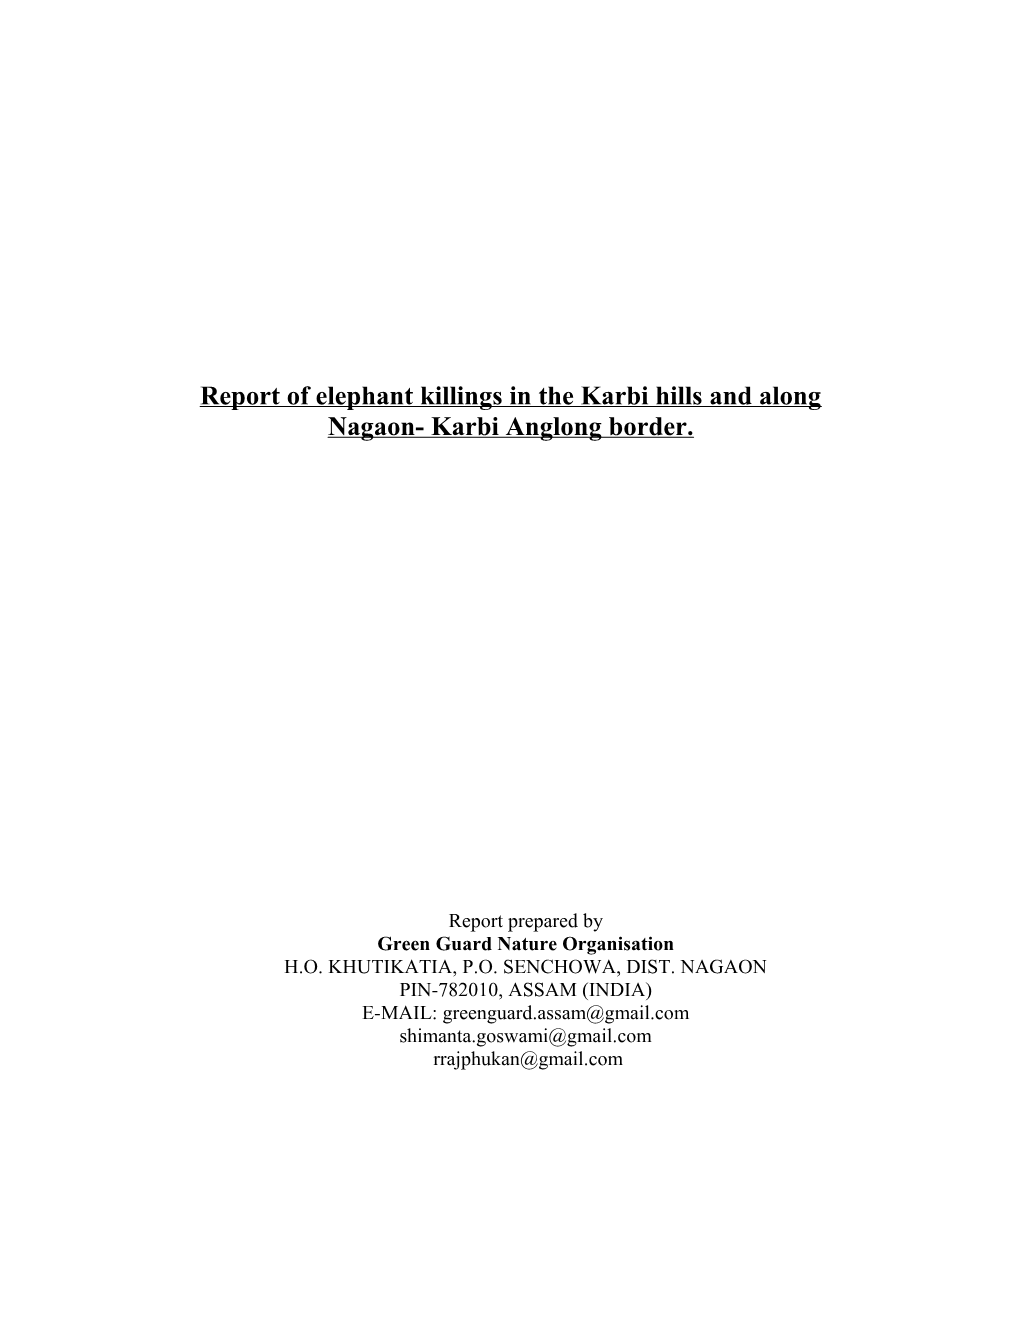 Report of Elephant Killings in the Karbi Hills and Along Nagaon- Karbi Anglong Border